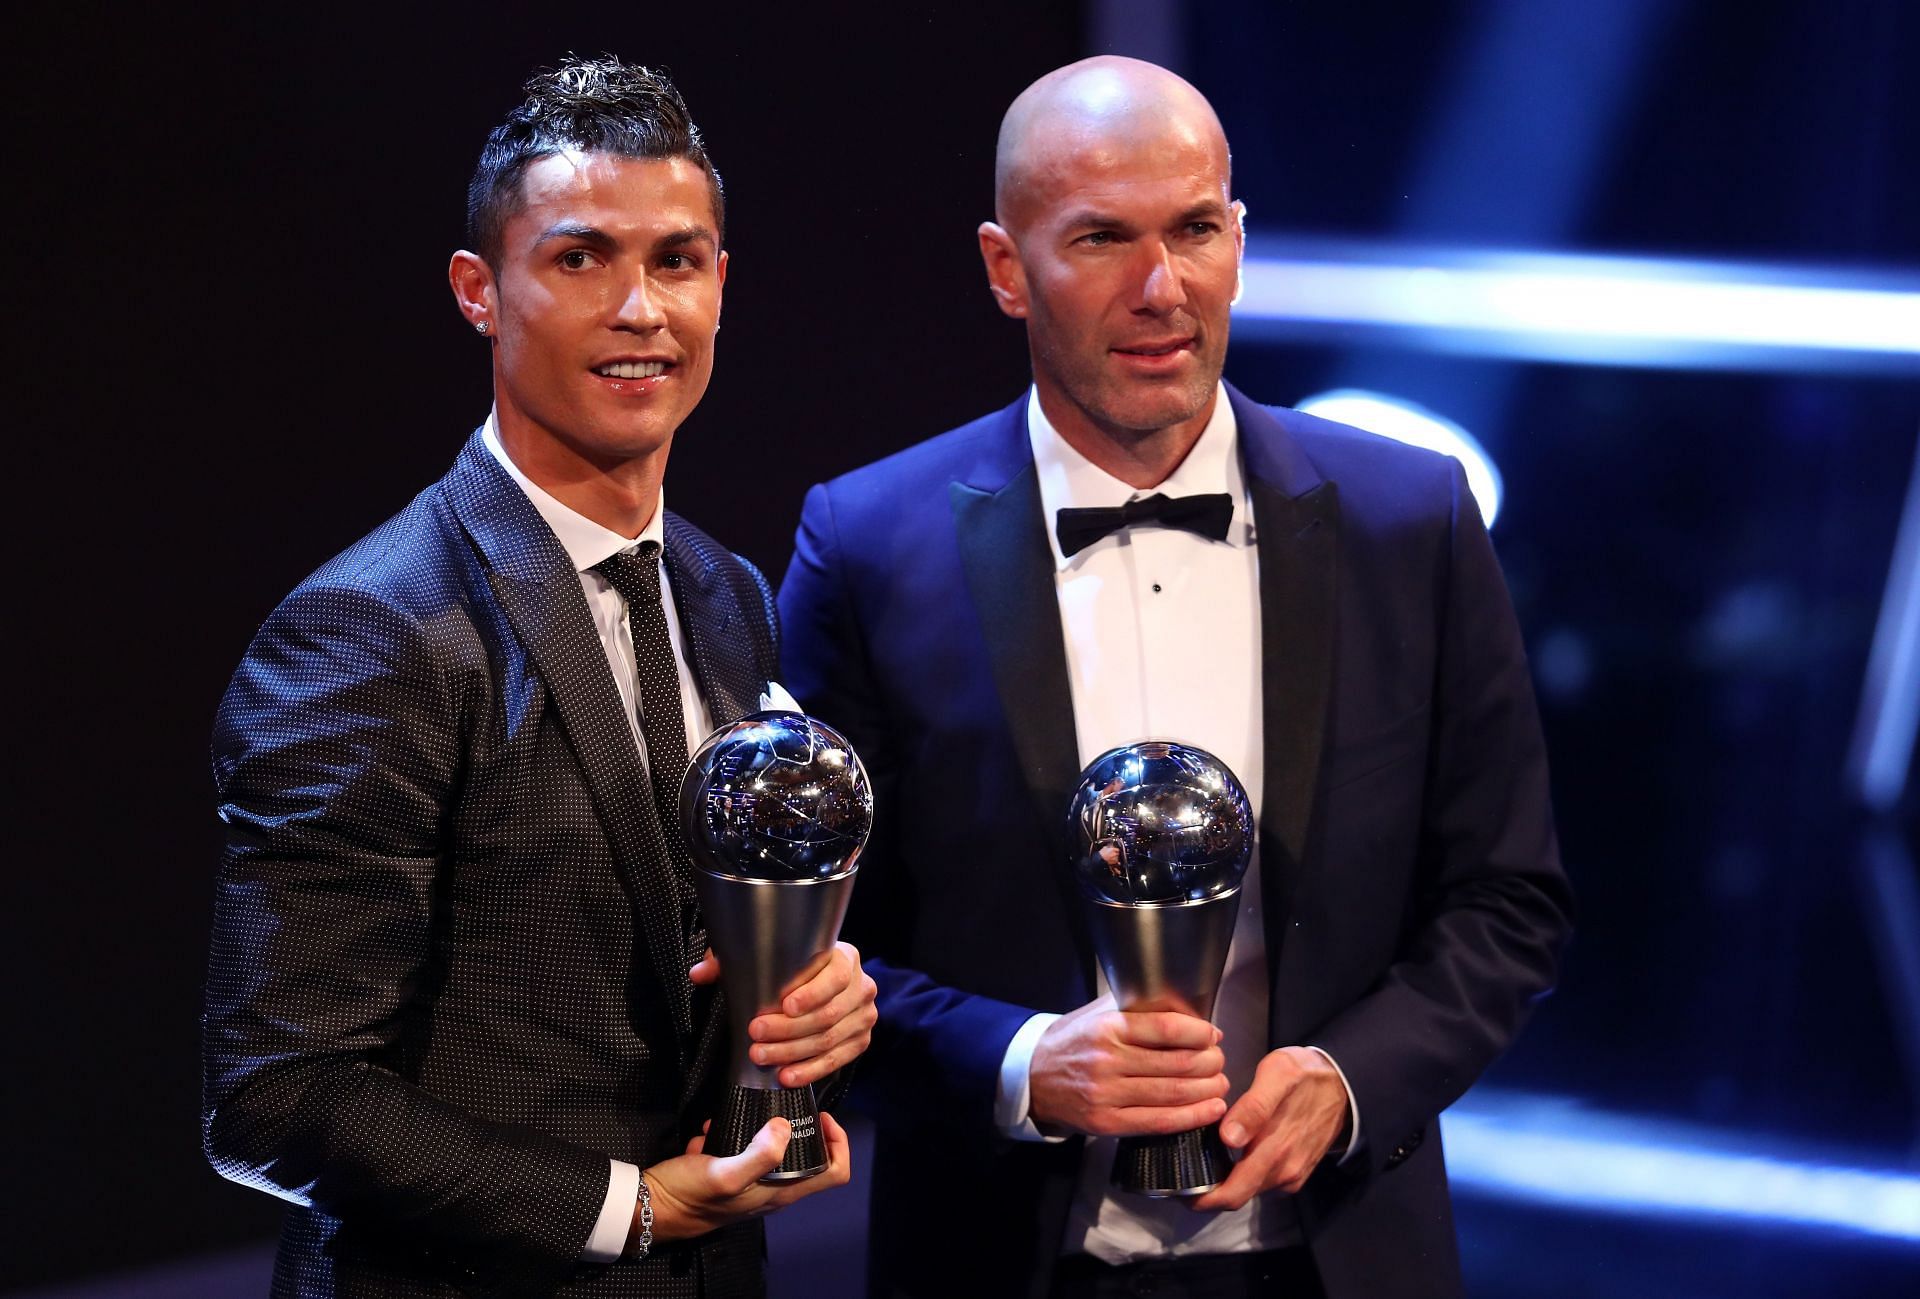 Cristiano Ronaldo flourished under ther former Madrid boss